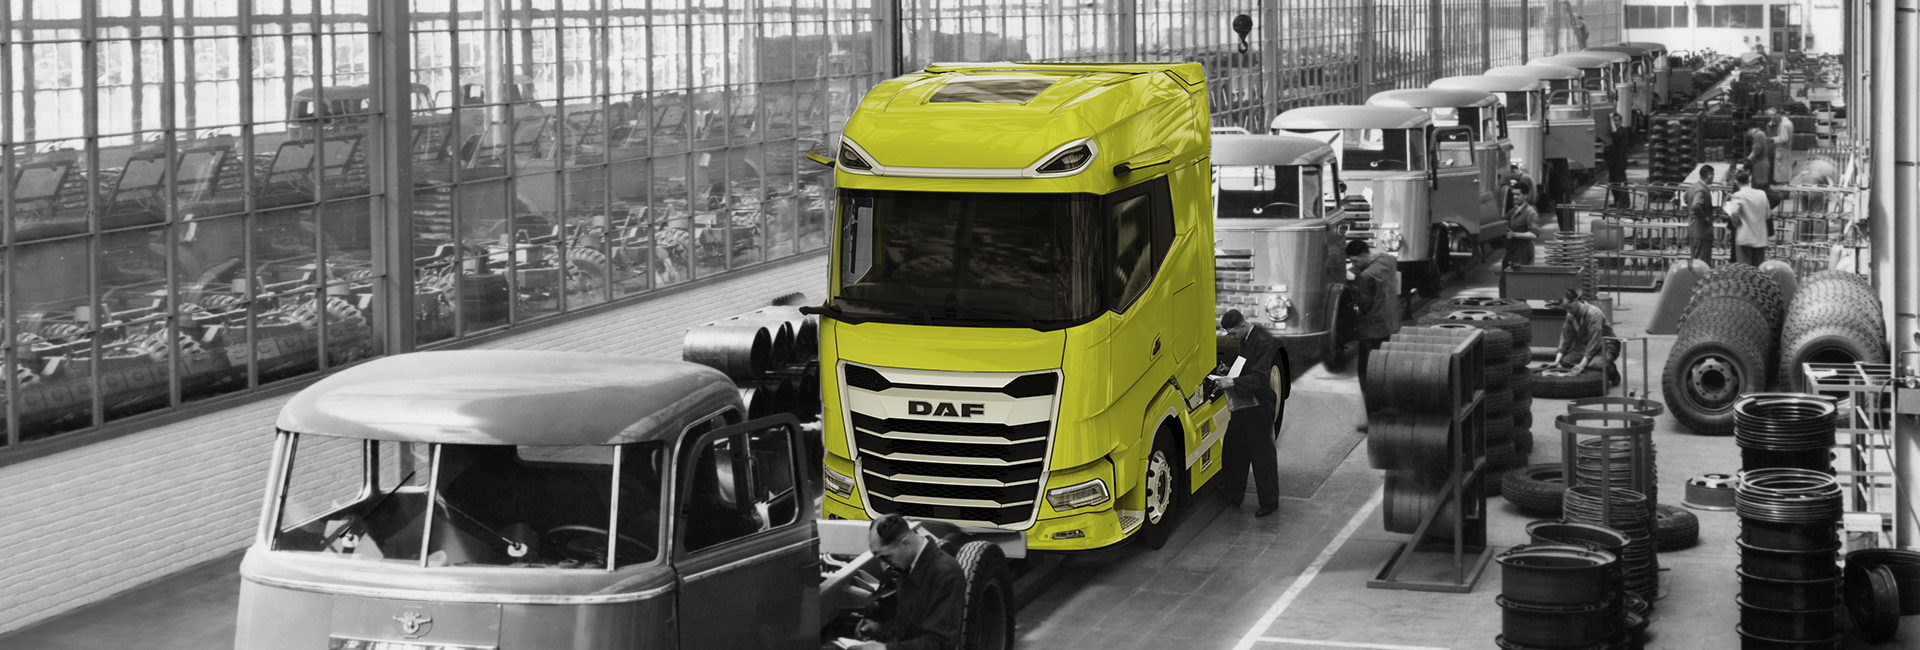 DAF trucks production European truck factory 